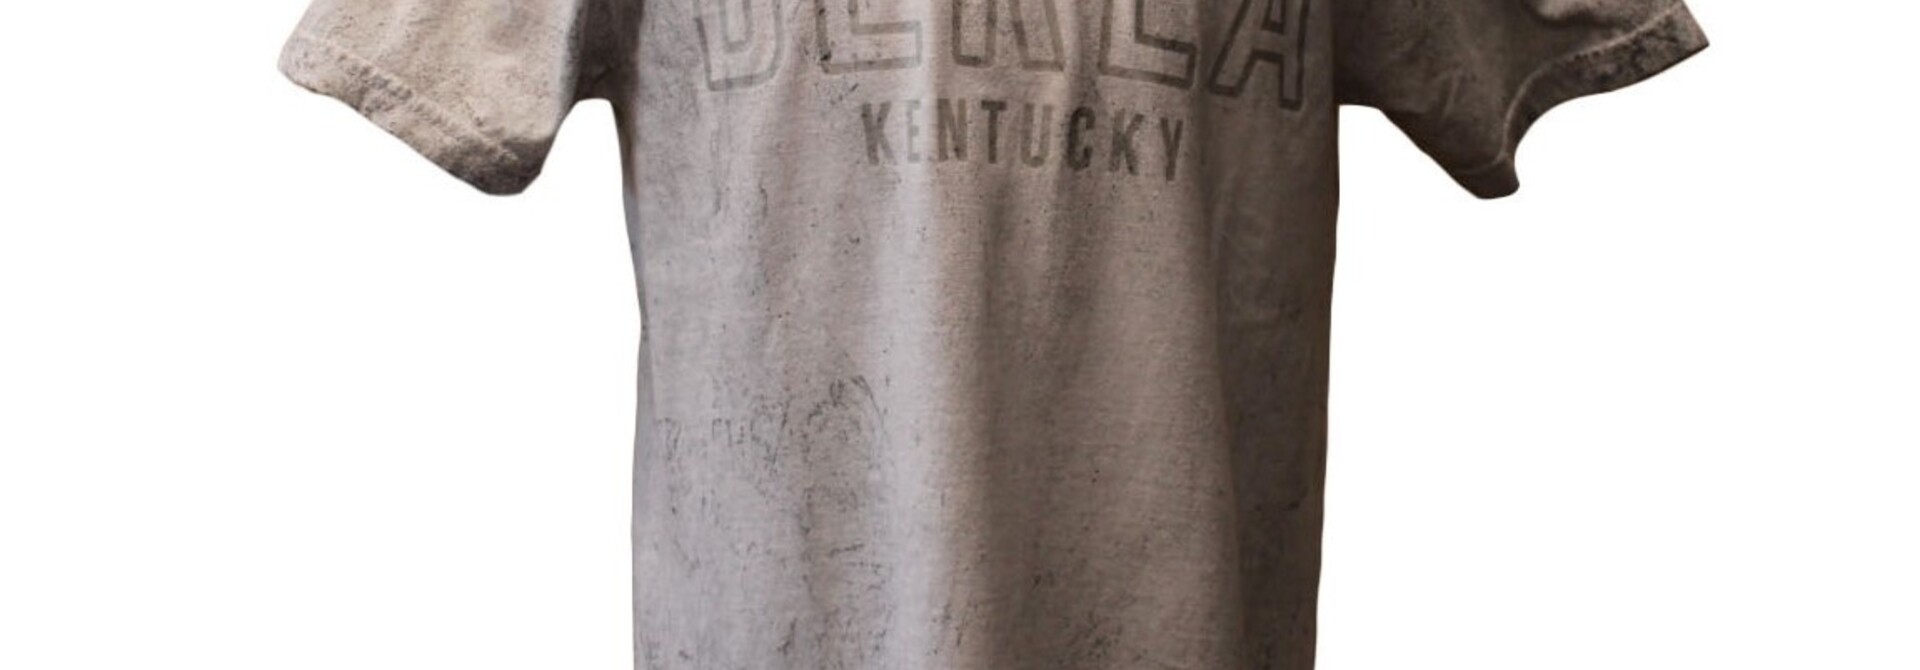 Berea Kentucky Tie Dye T-shirt